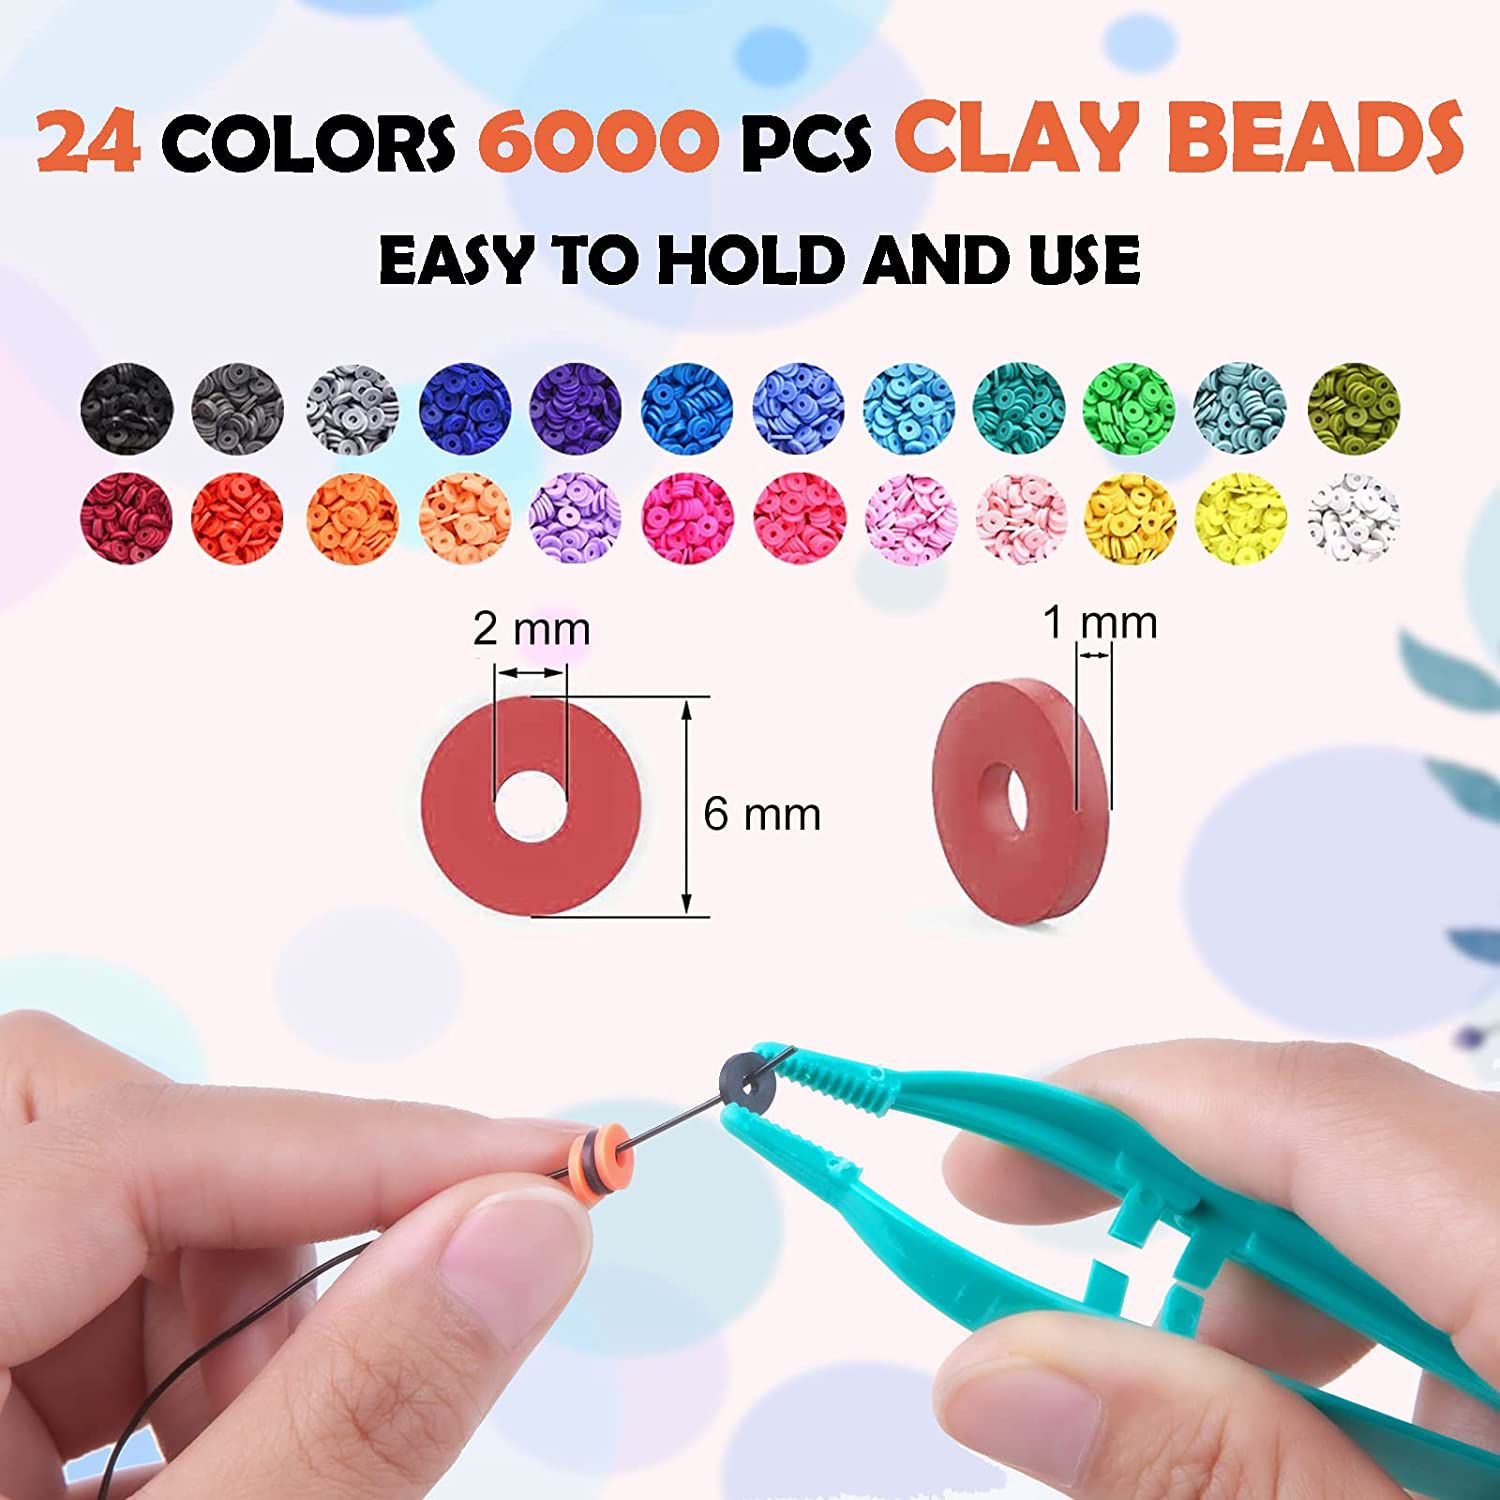 Clay Beads 7200 Pcs 2 Boxes Bracelet Making Kit - 24 Colors Polymer Clay Beads for Bracelet Making Set - Jewelry Making kit Supplies and Charms - Brac